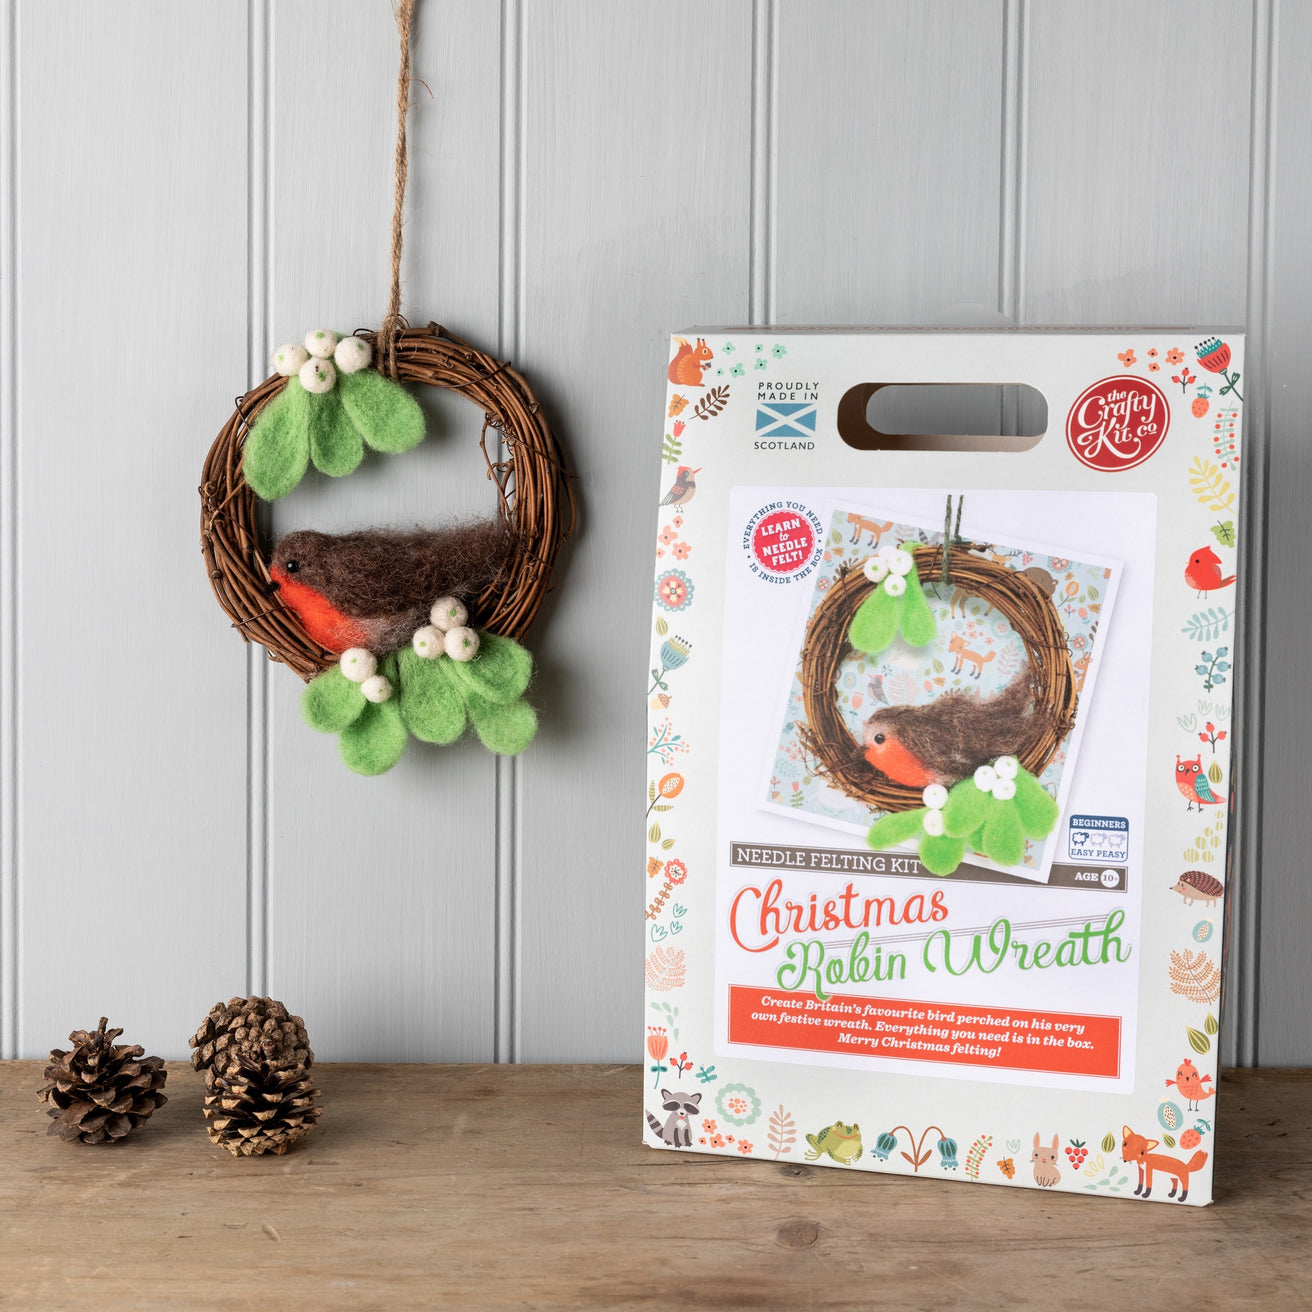 Christmas Robin Wreath Needle felting craft Kit - The Crafty Kit Company